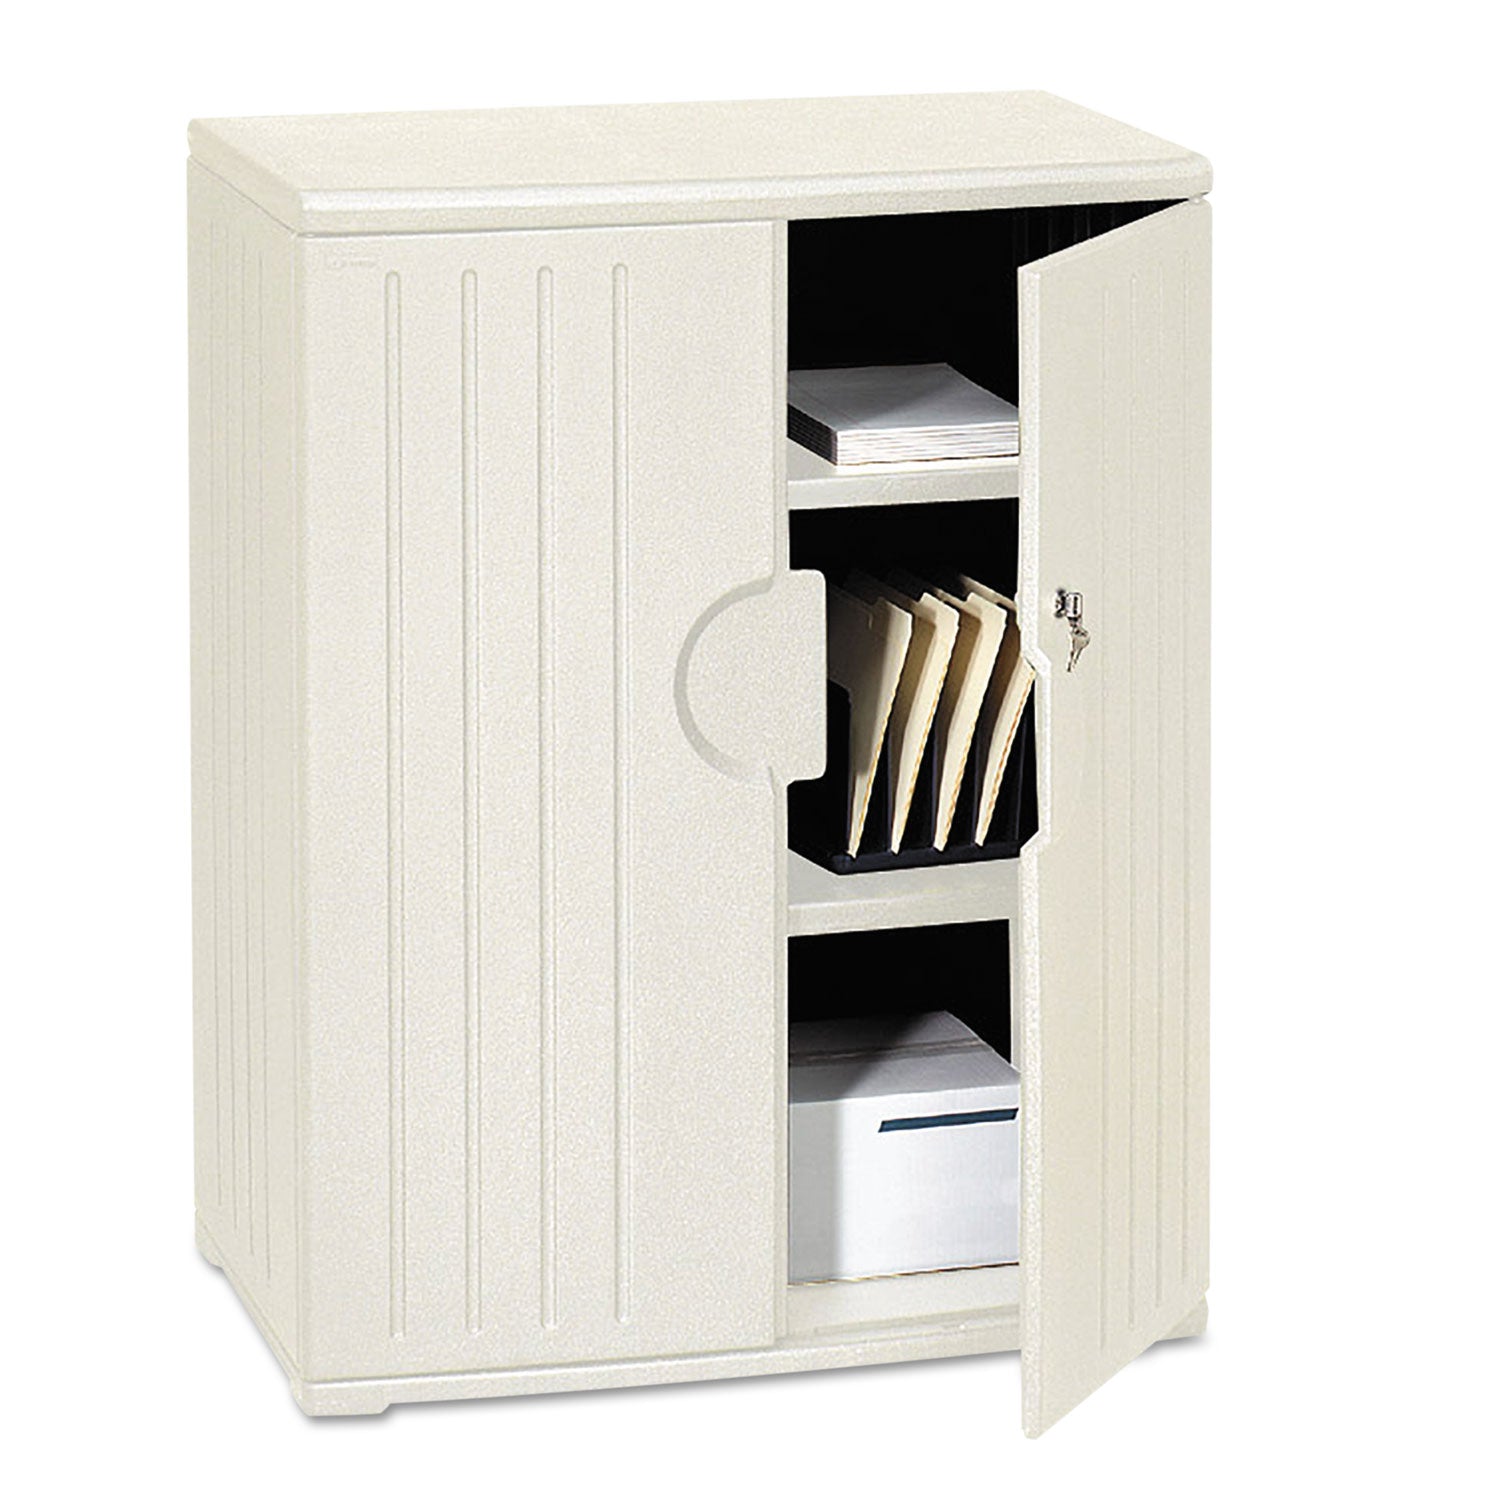 Rough n Ready Storage Cabinet, Two-Shelf, 36w x 22d x 46h, Platinum - 